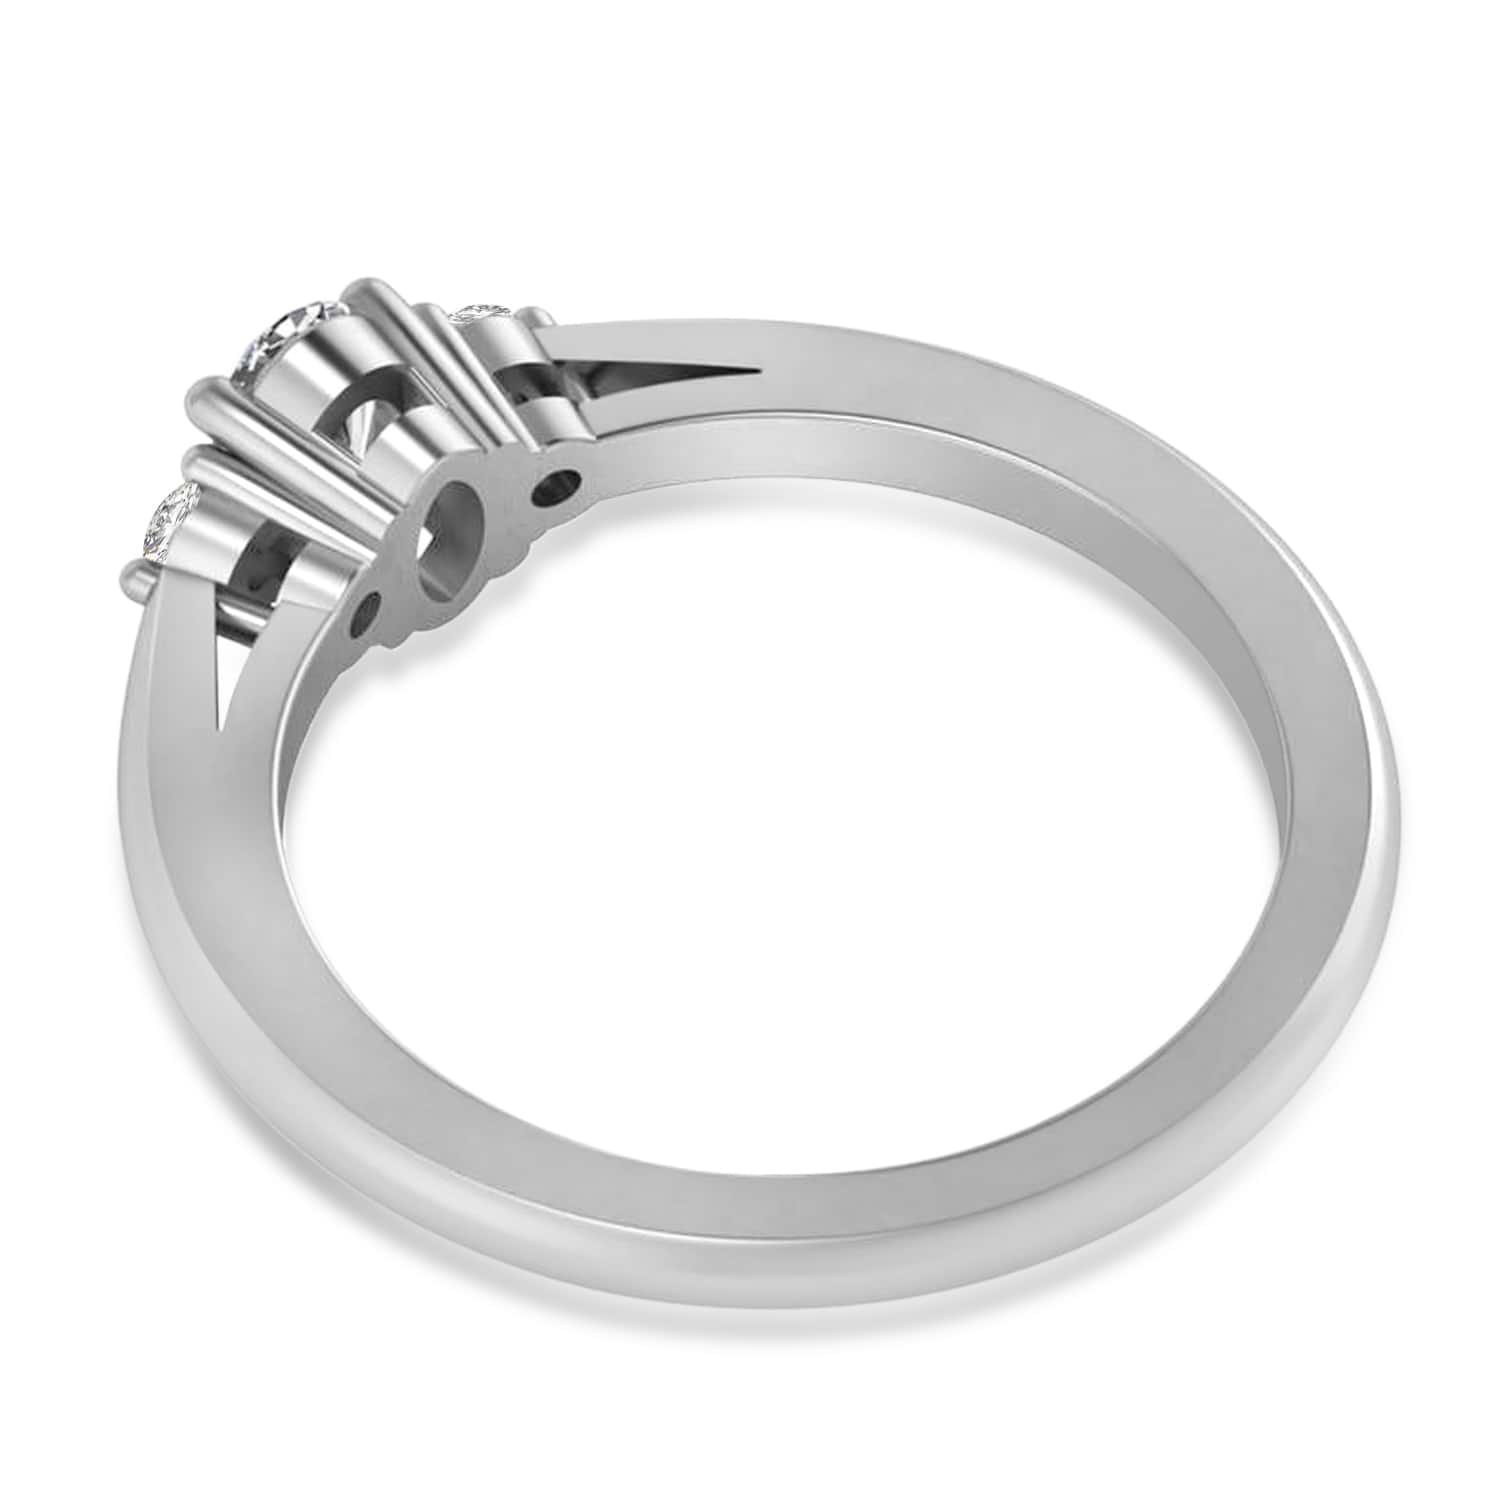 Oval Lab Grown Diamond Three-Stone Engagement Ring 14k White Gold (0.60ct)